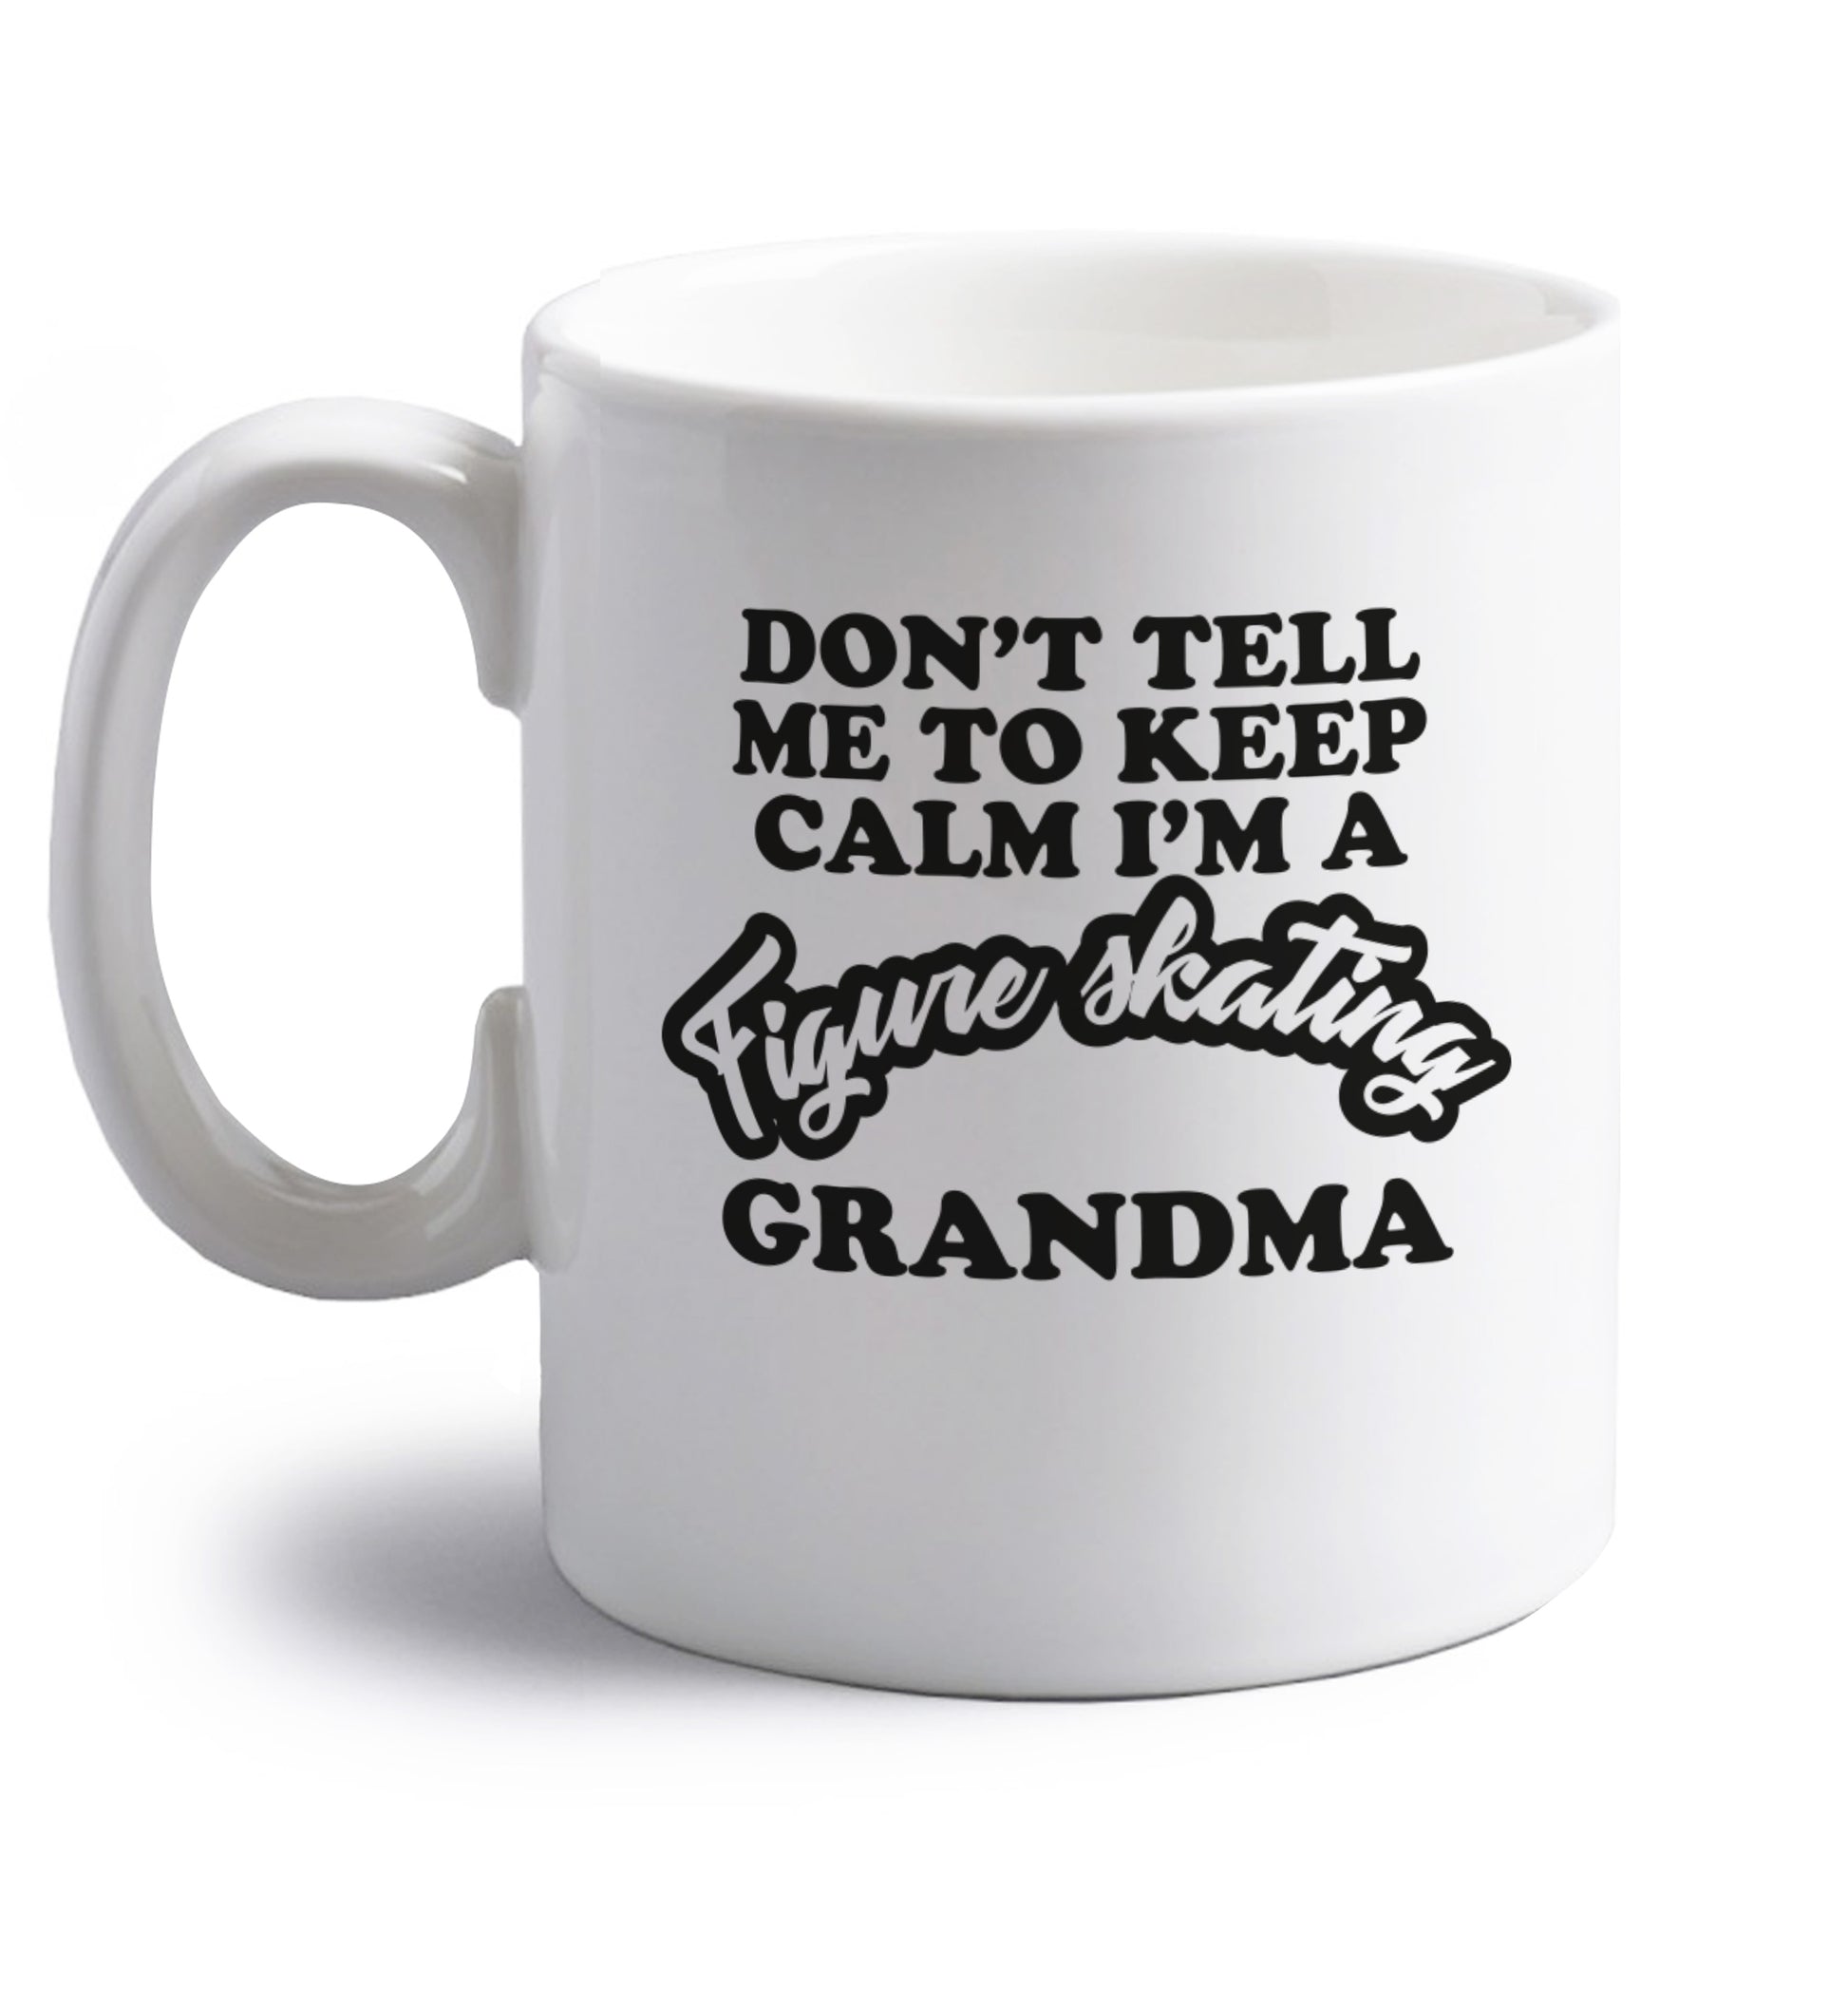 Don't tell me to keep calm I'm a figure skating grandma right handed white ceramic mug 